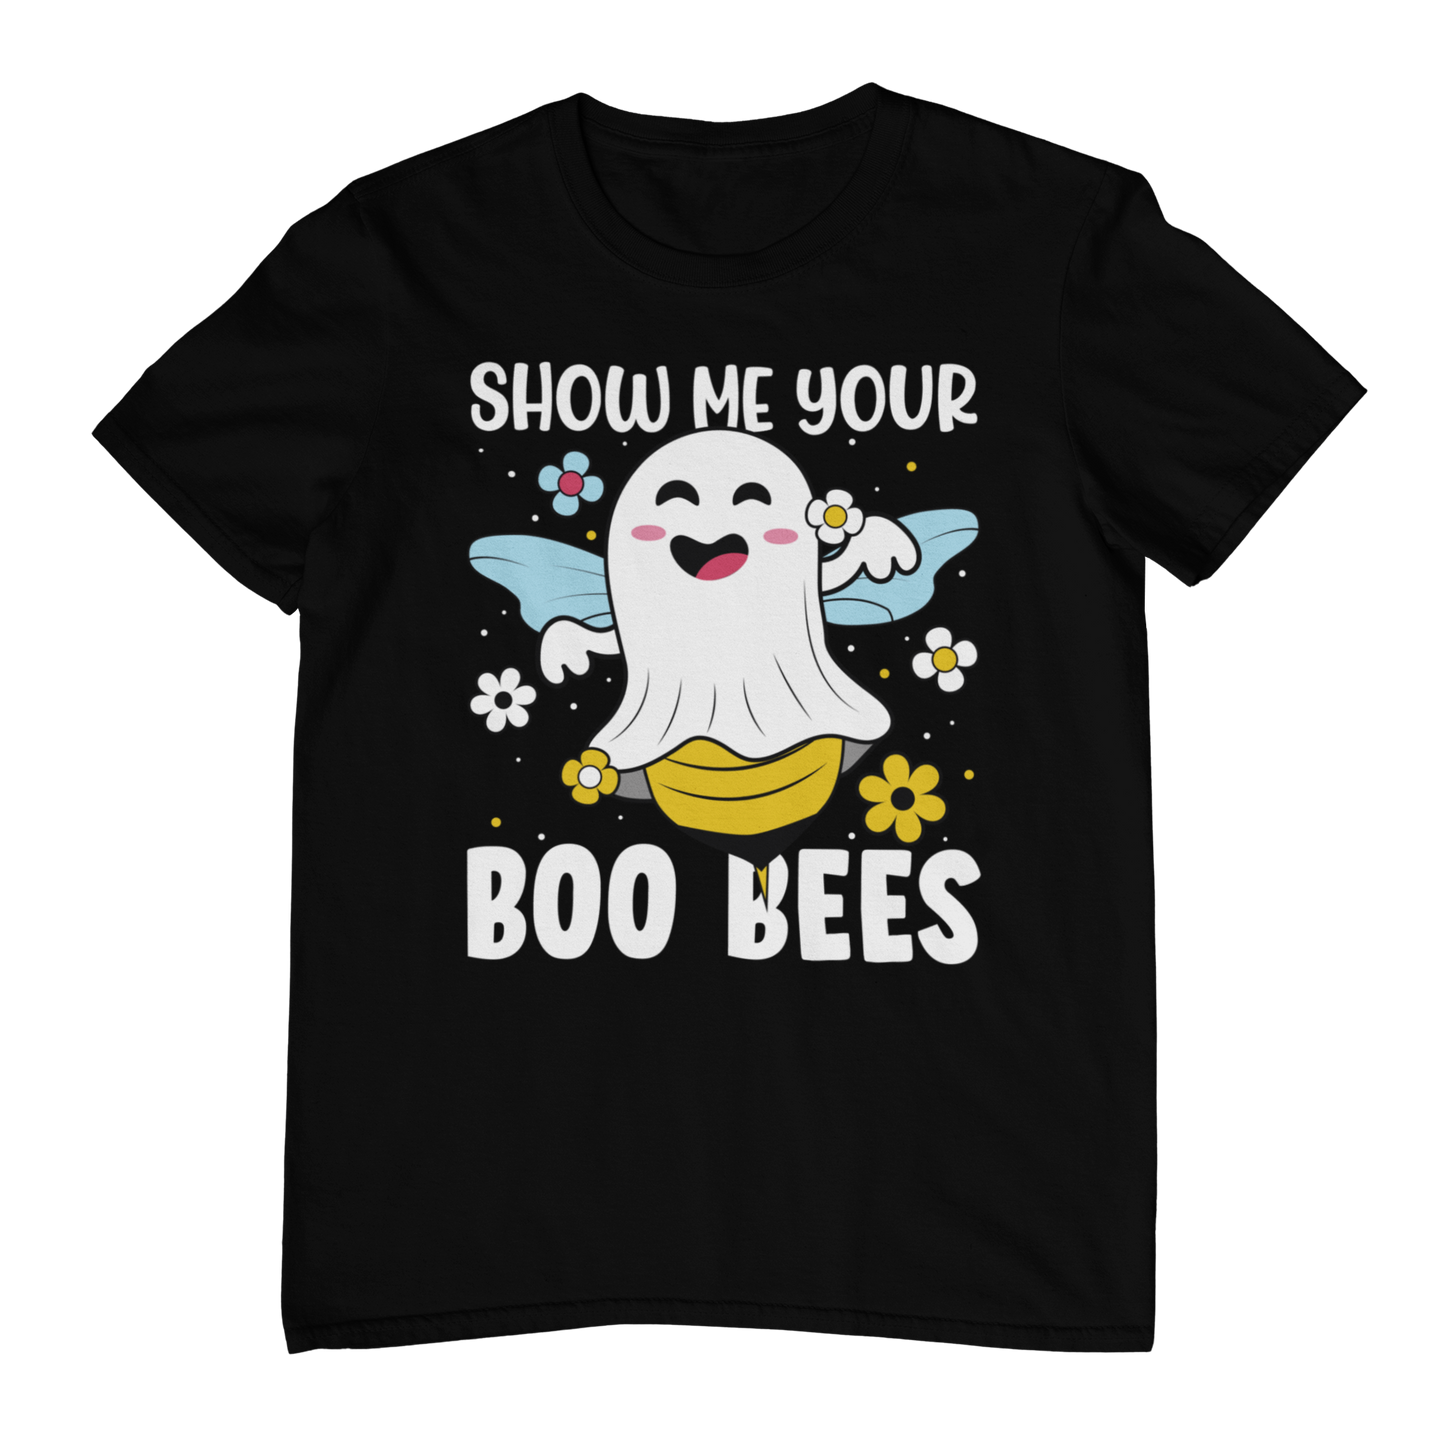 Boo bee T-shirt